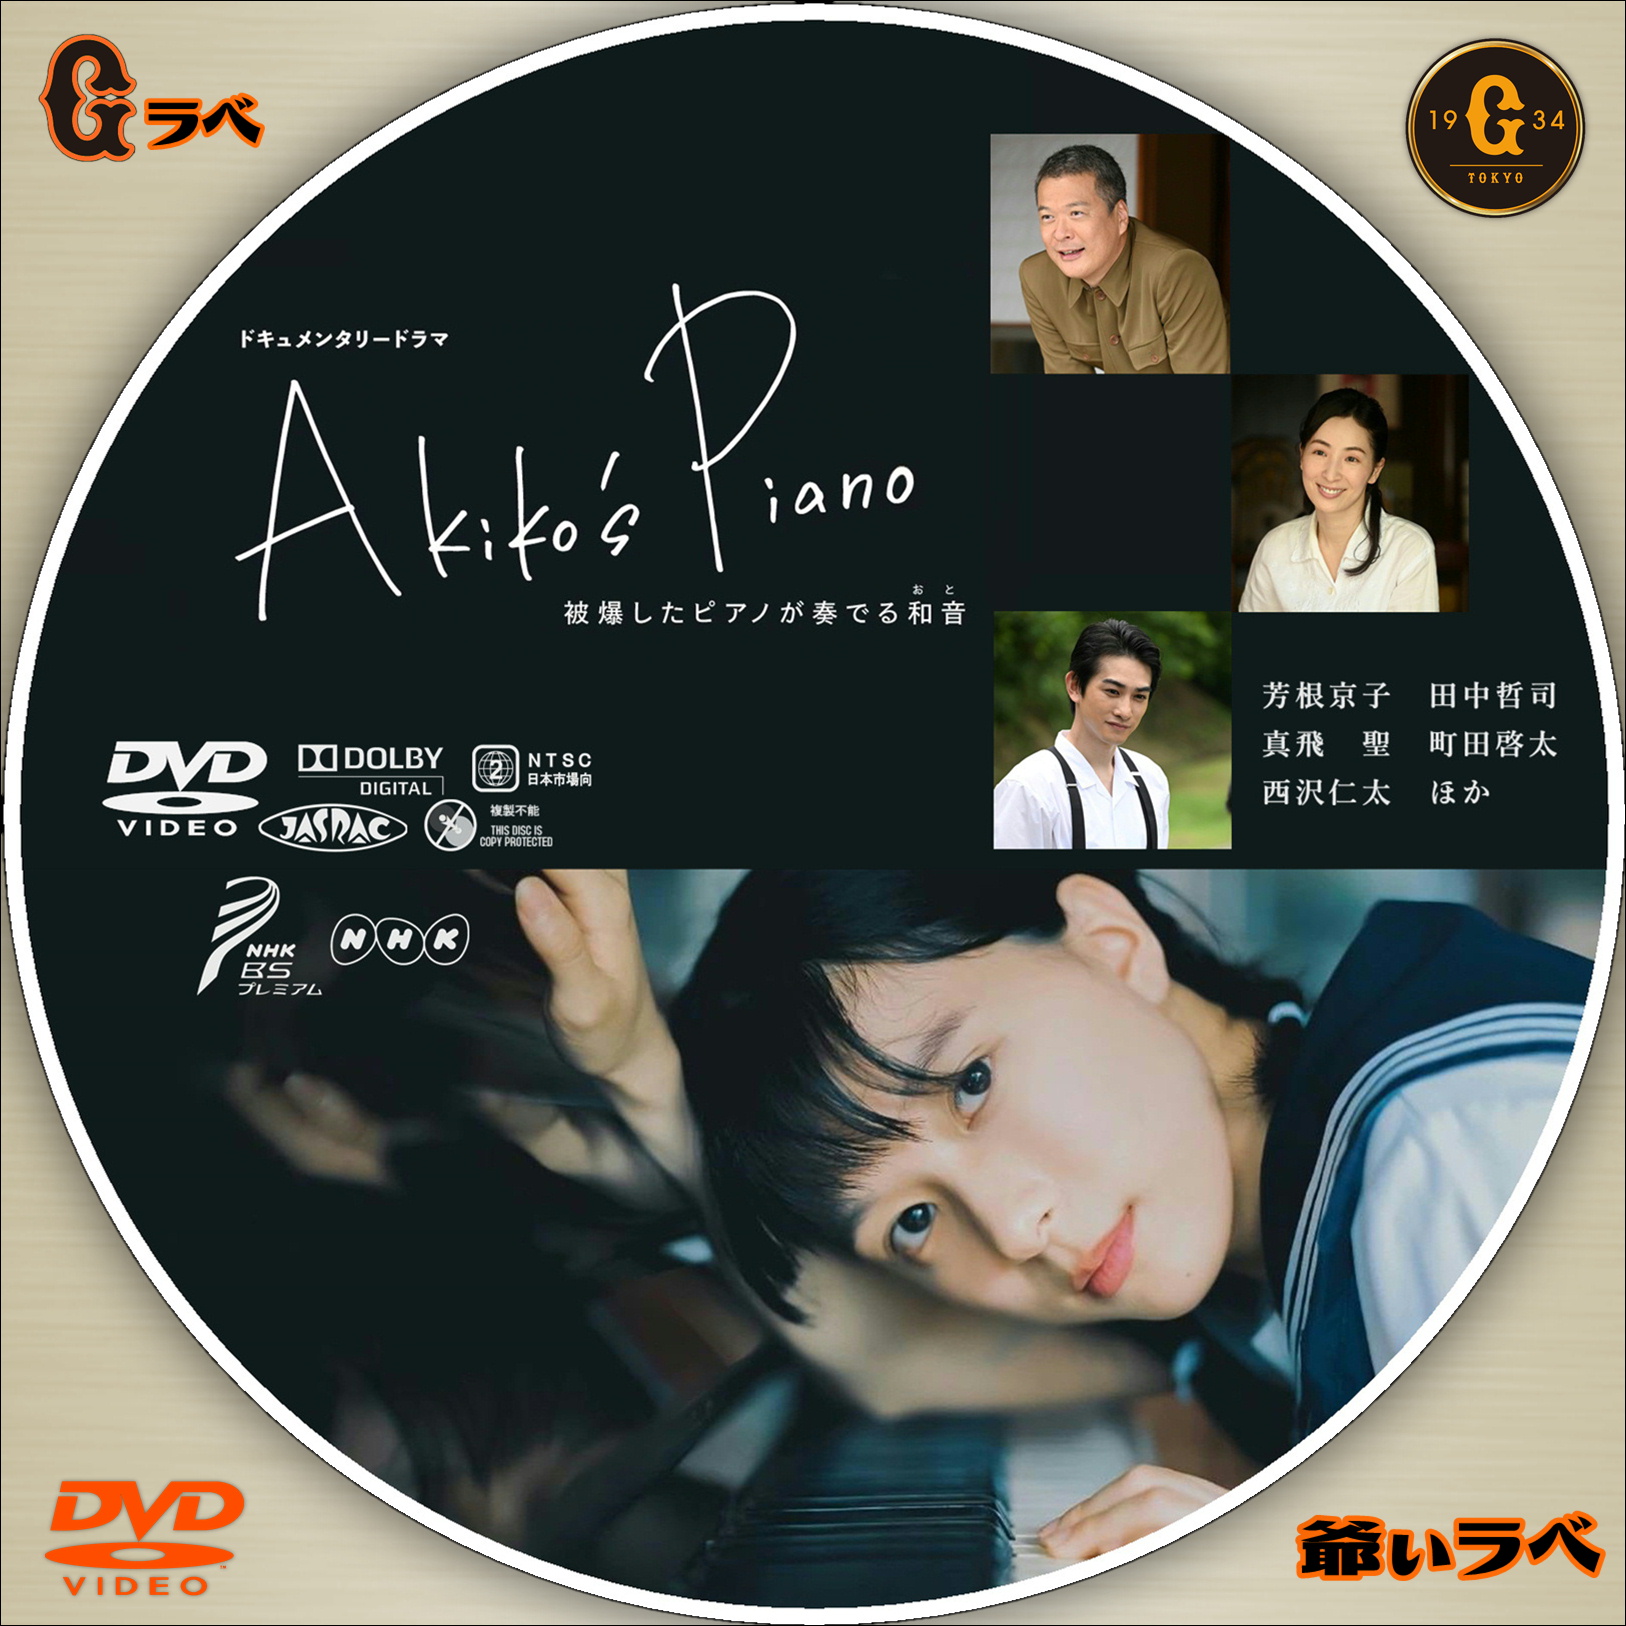 Akikos Piano 被爆したピアノが奏でる和音（おと）（DVD）